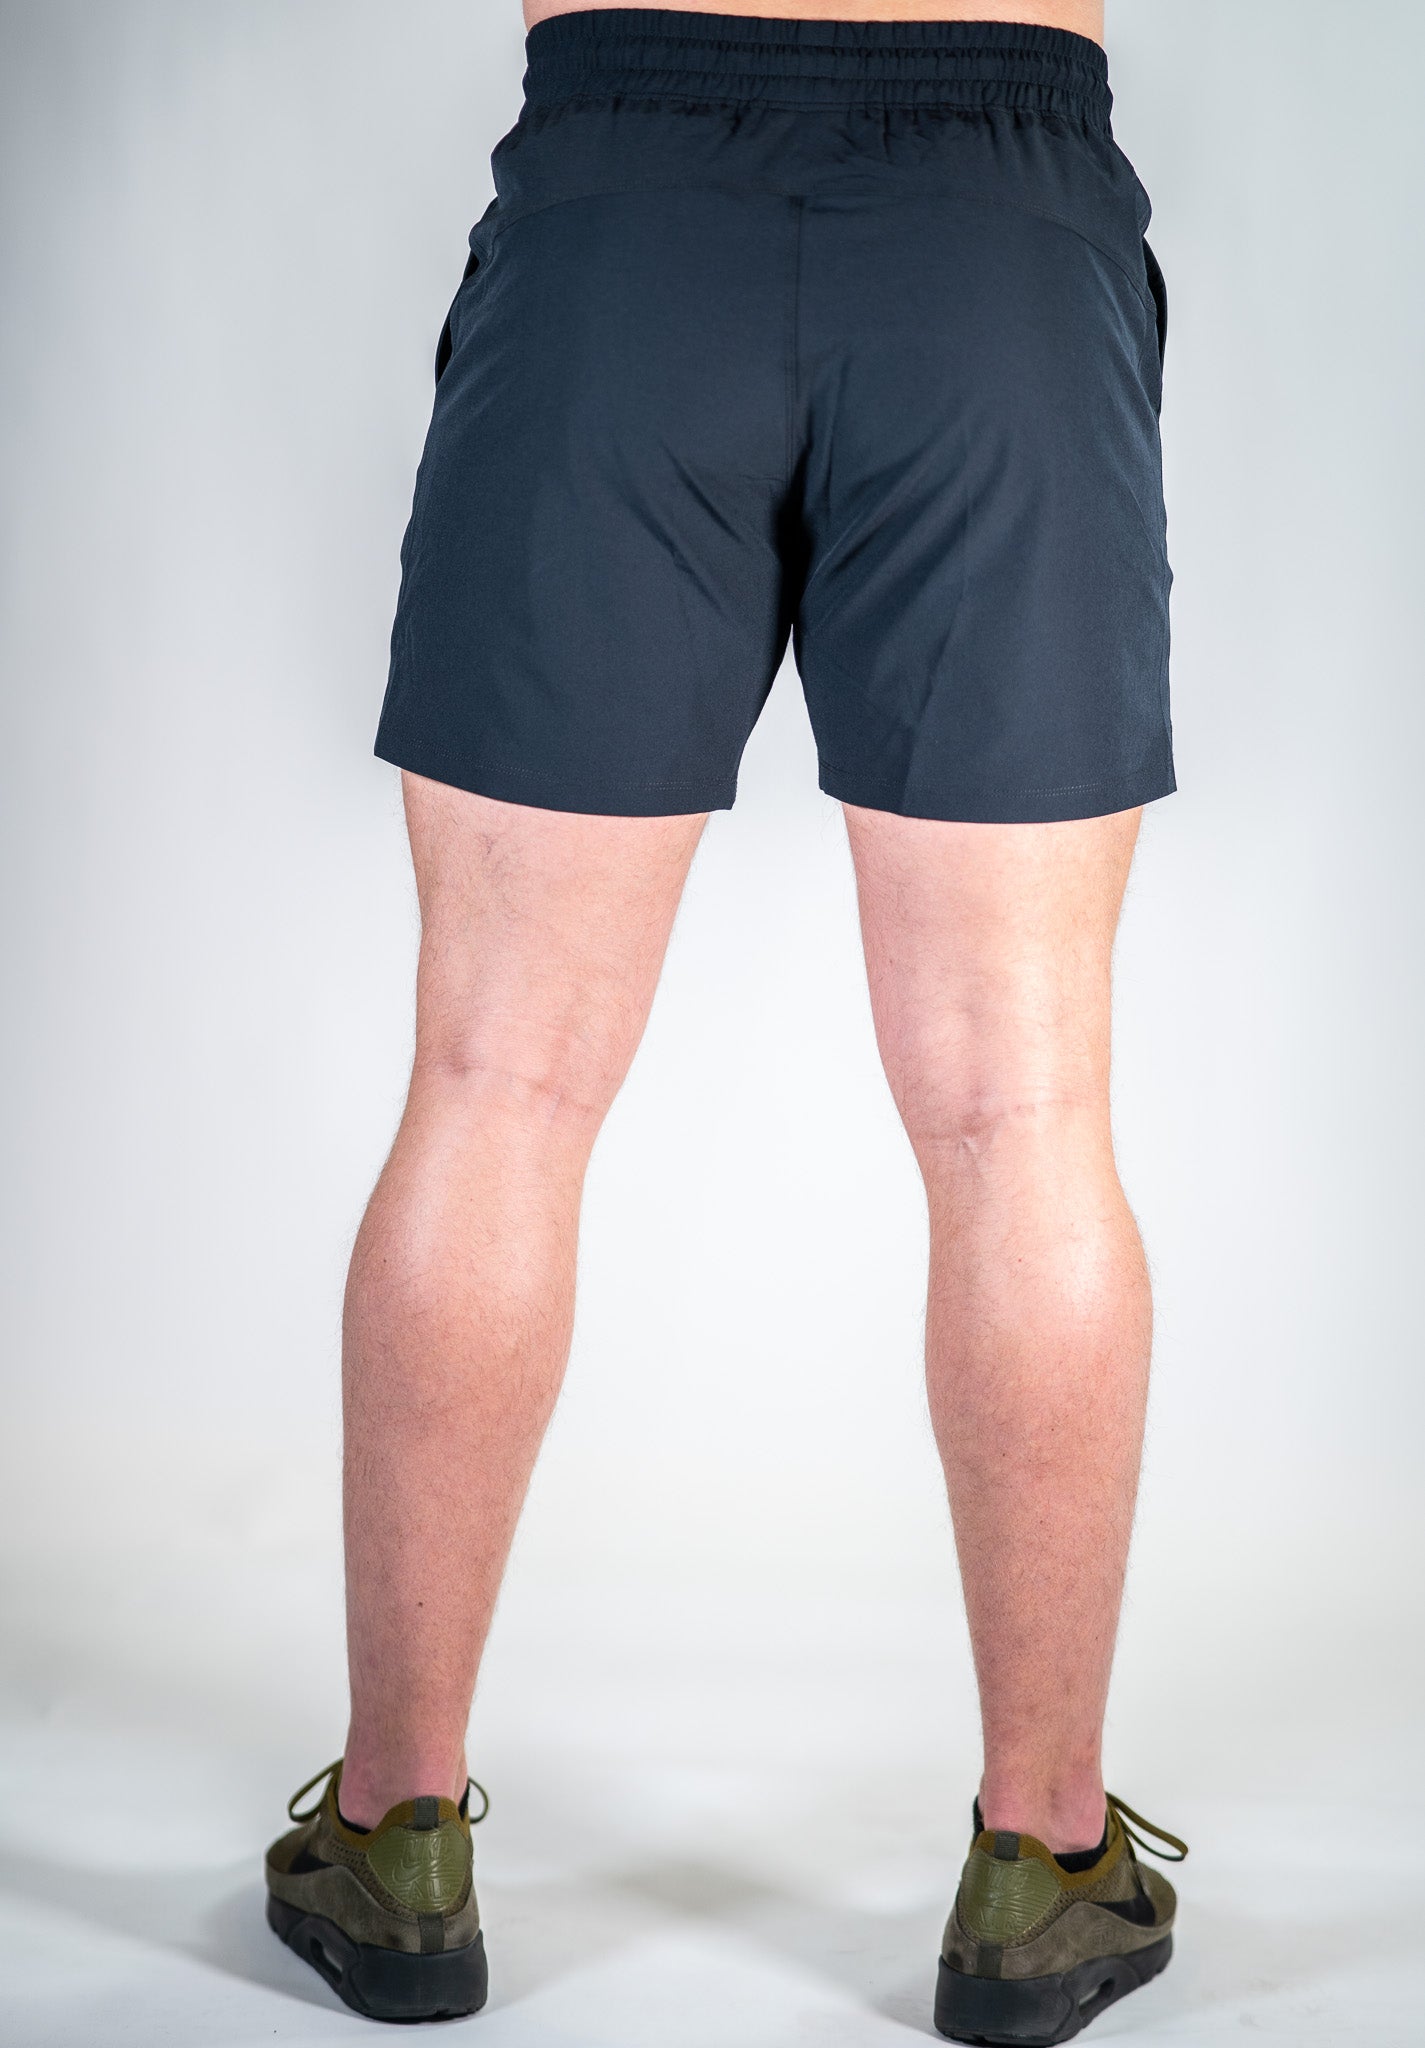 Precision Shorts 6” - Black - VITAL APPAREL